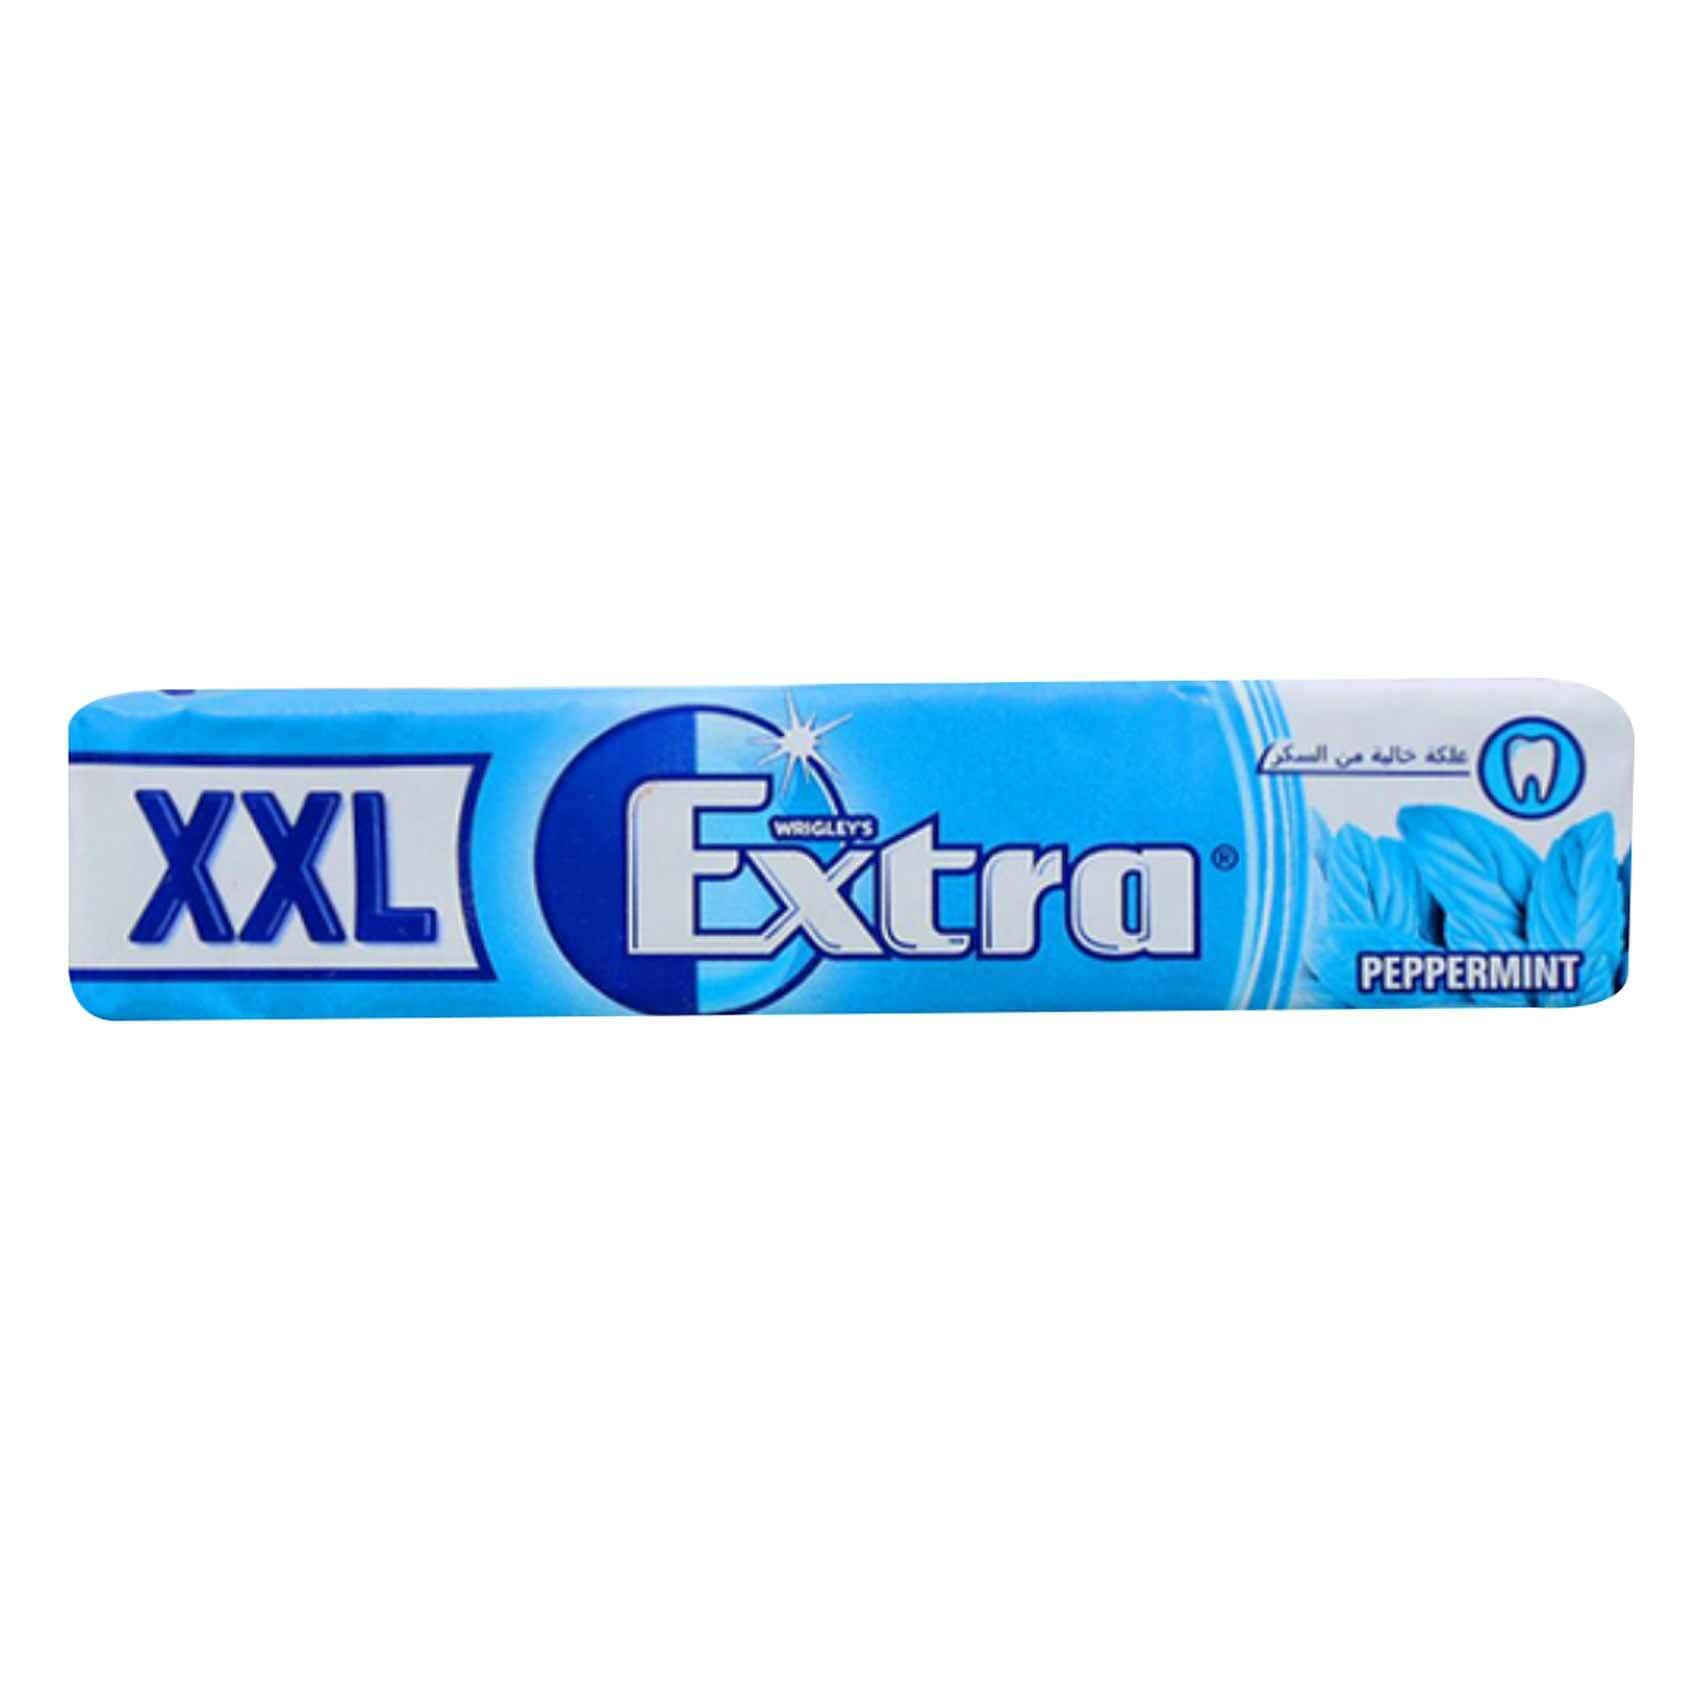 terugtrekken Paragraaf Doorlaatbaarheid Buy Wrigley's XXL Extra Peppermint Chewing Gum 21g Online - Shop Food  Cupboard on Carrefour UAE